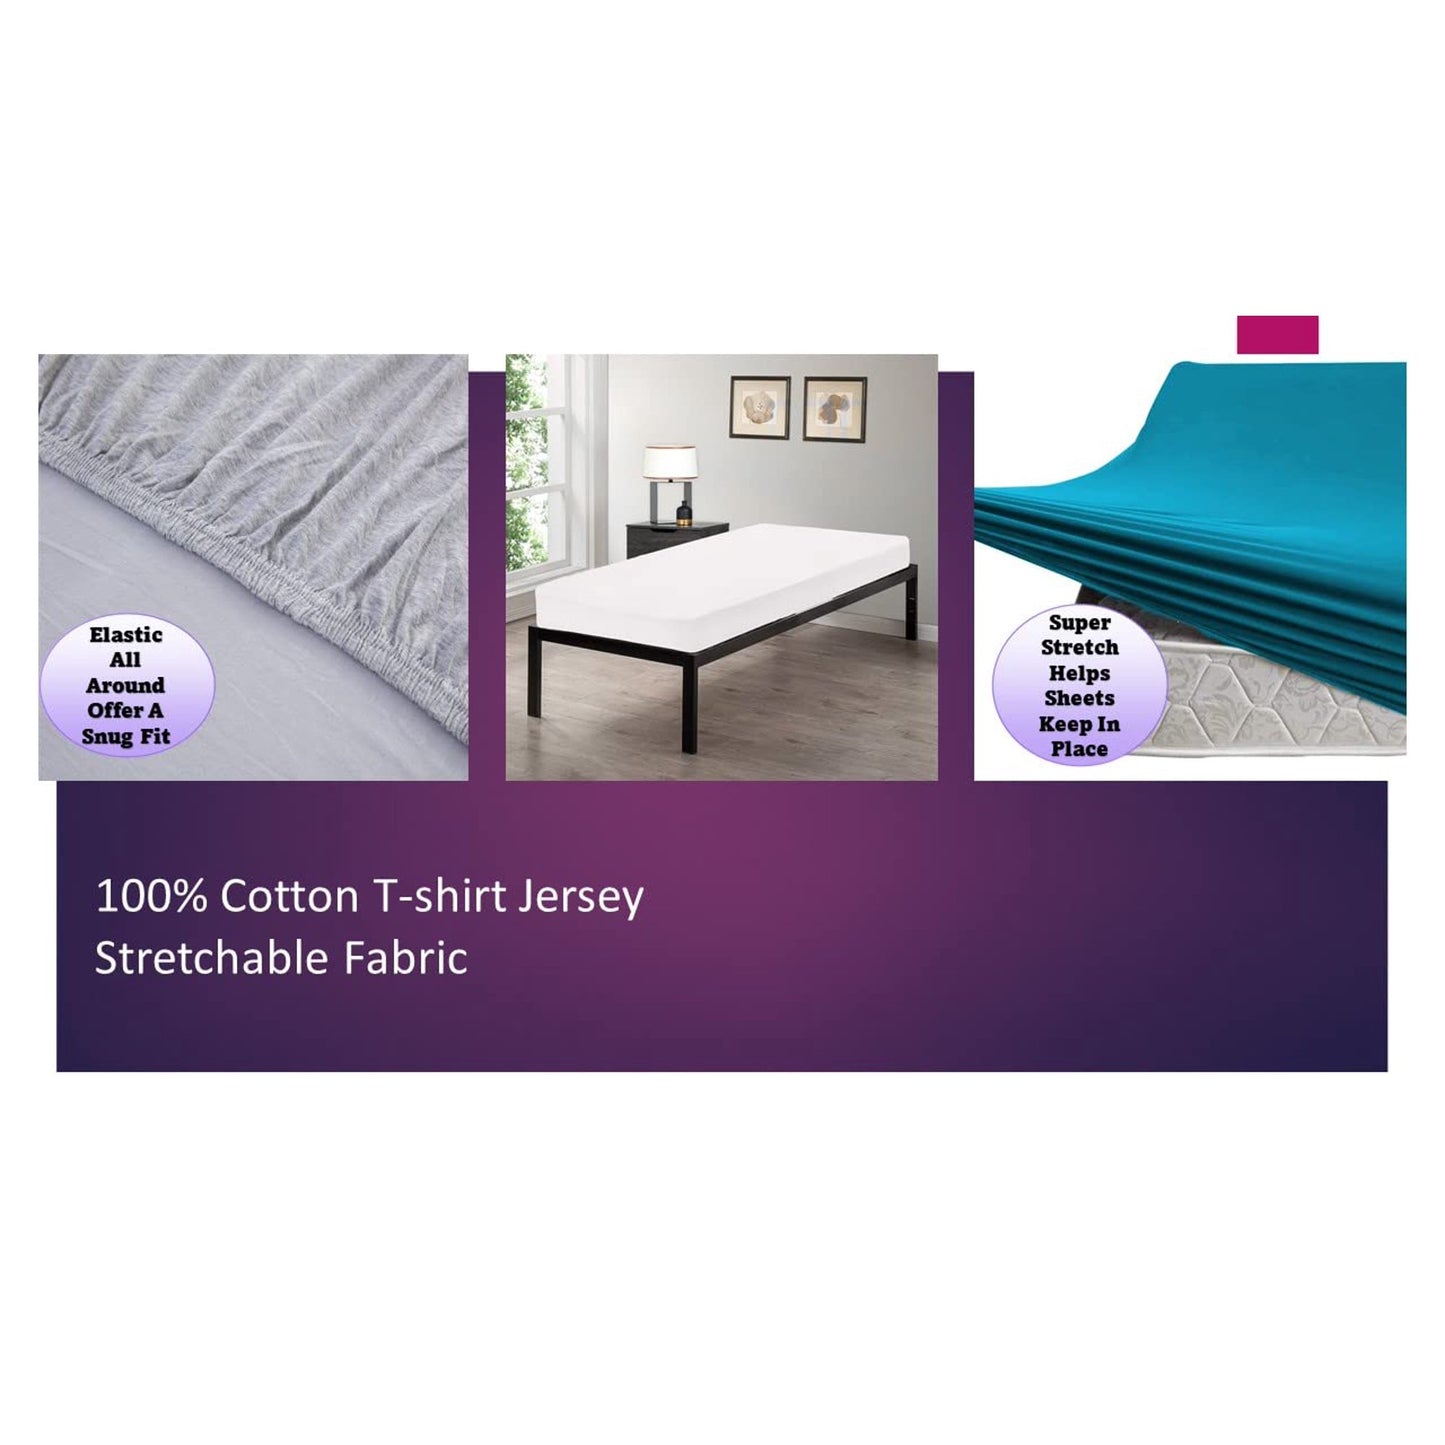 100% Combed T-Shirt Cotton Jersey Knit Camp Sheet Set, 1 Fitted cot Sheet, 1 Flat Sheet, 1 Standard Pillow case Rainbow Print (Cot)